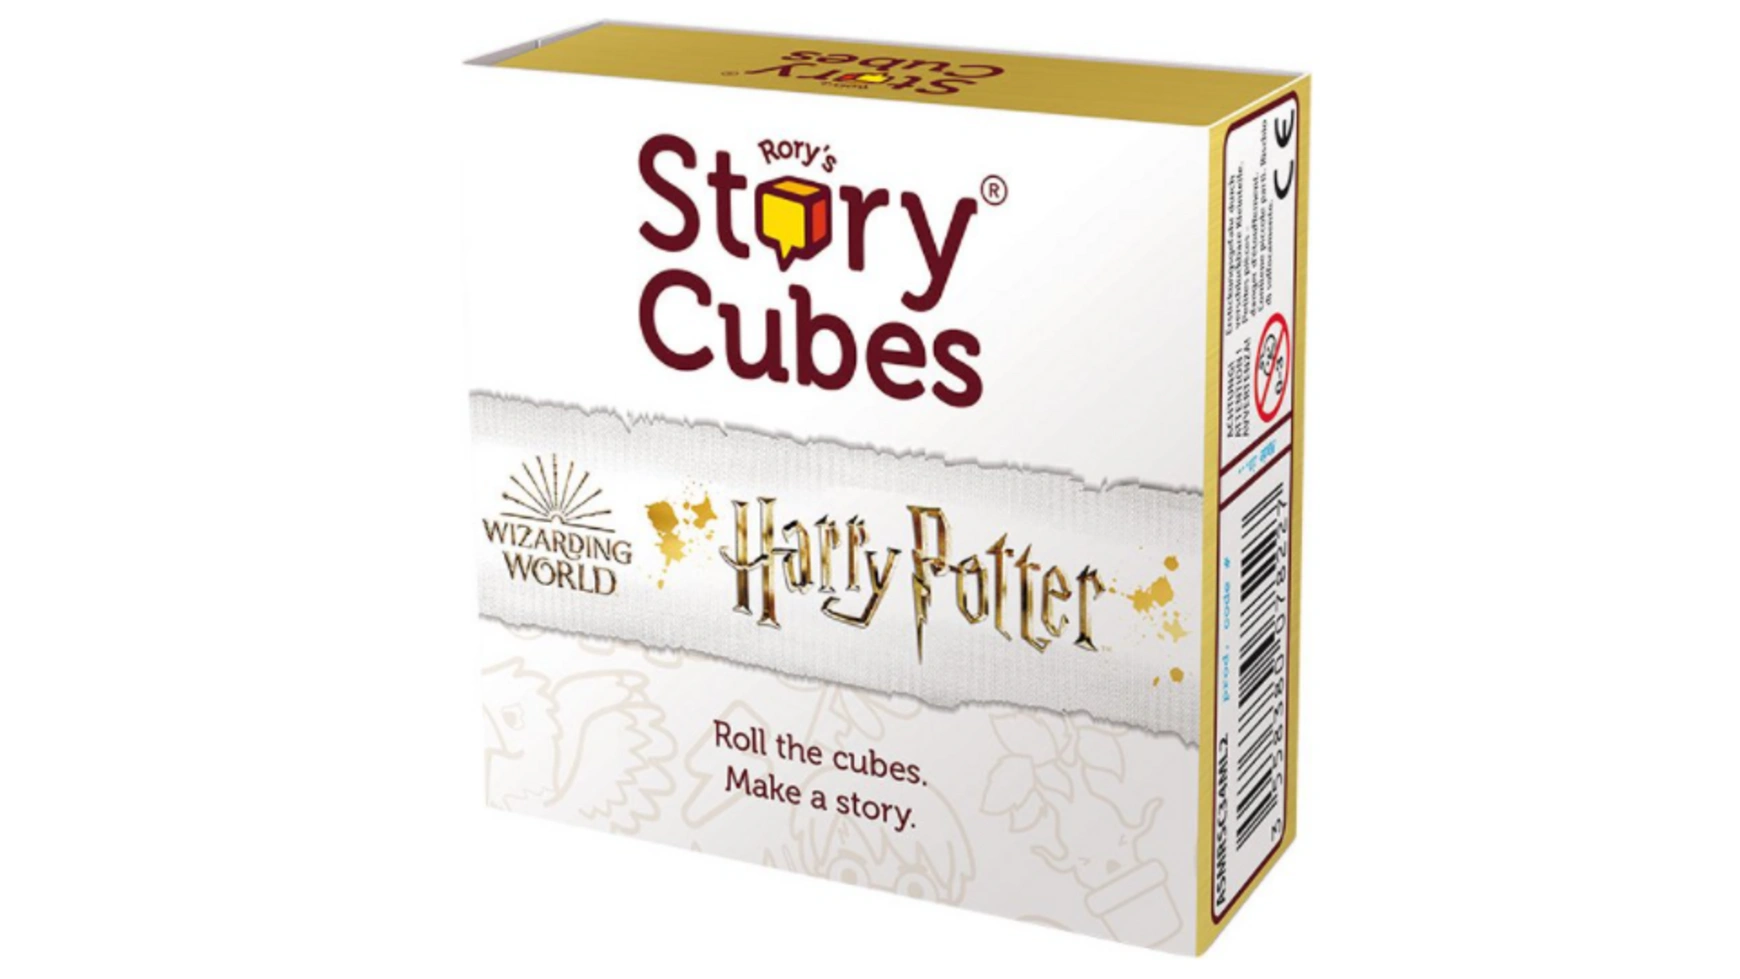 Rorys Story Cubes Кубики историй Рори: Гарри Поттер rubiks кубики историй действия